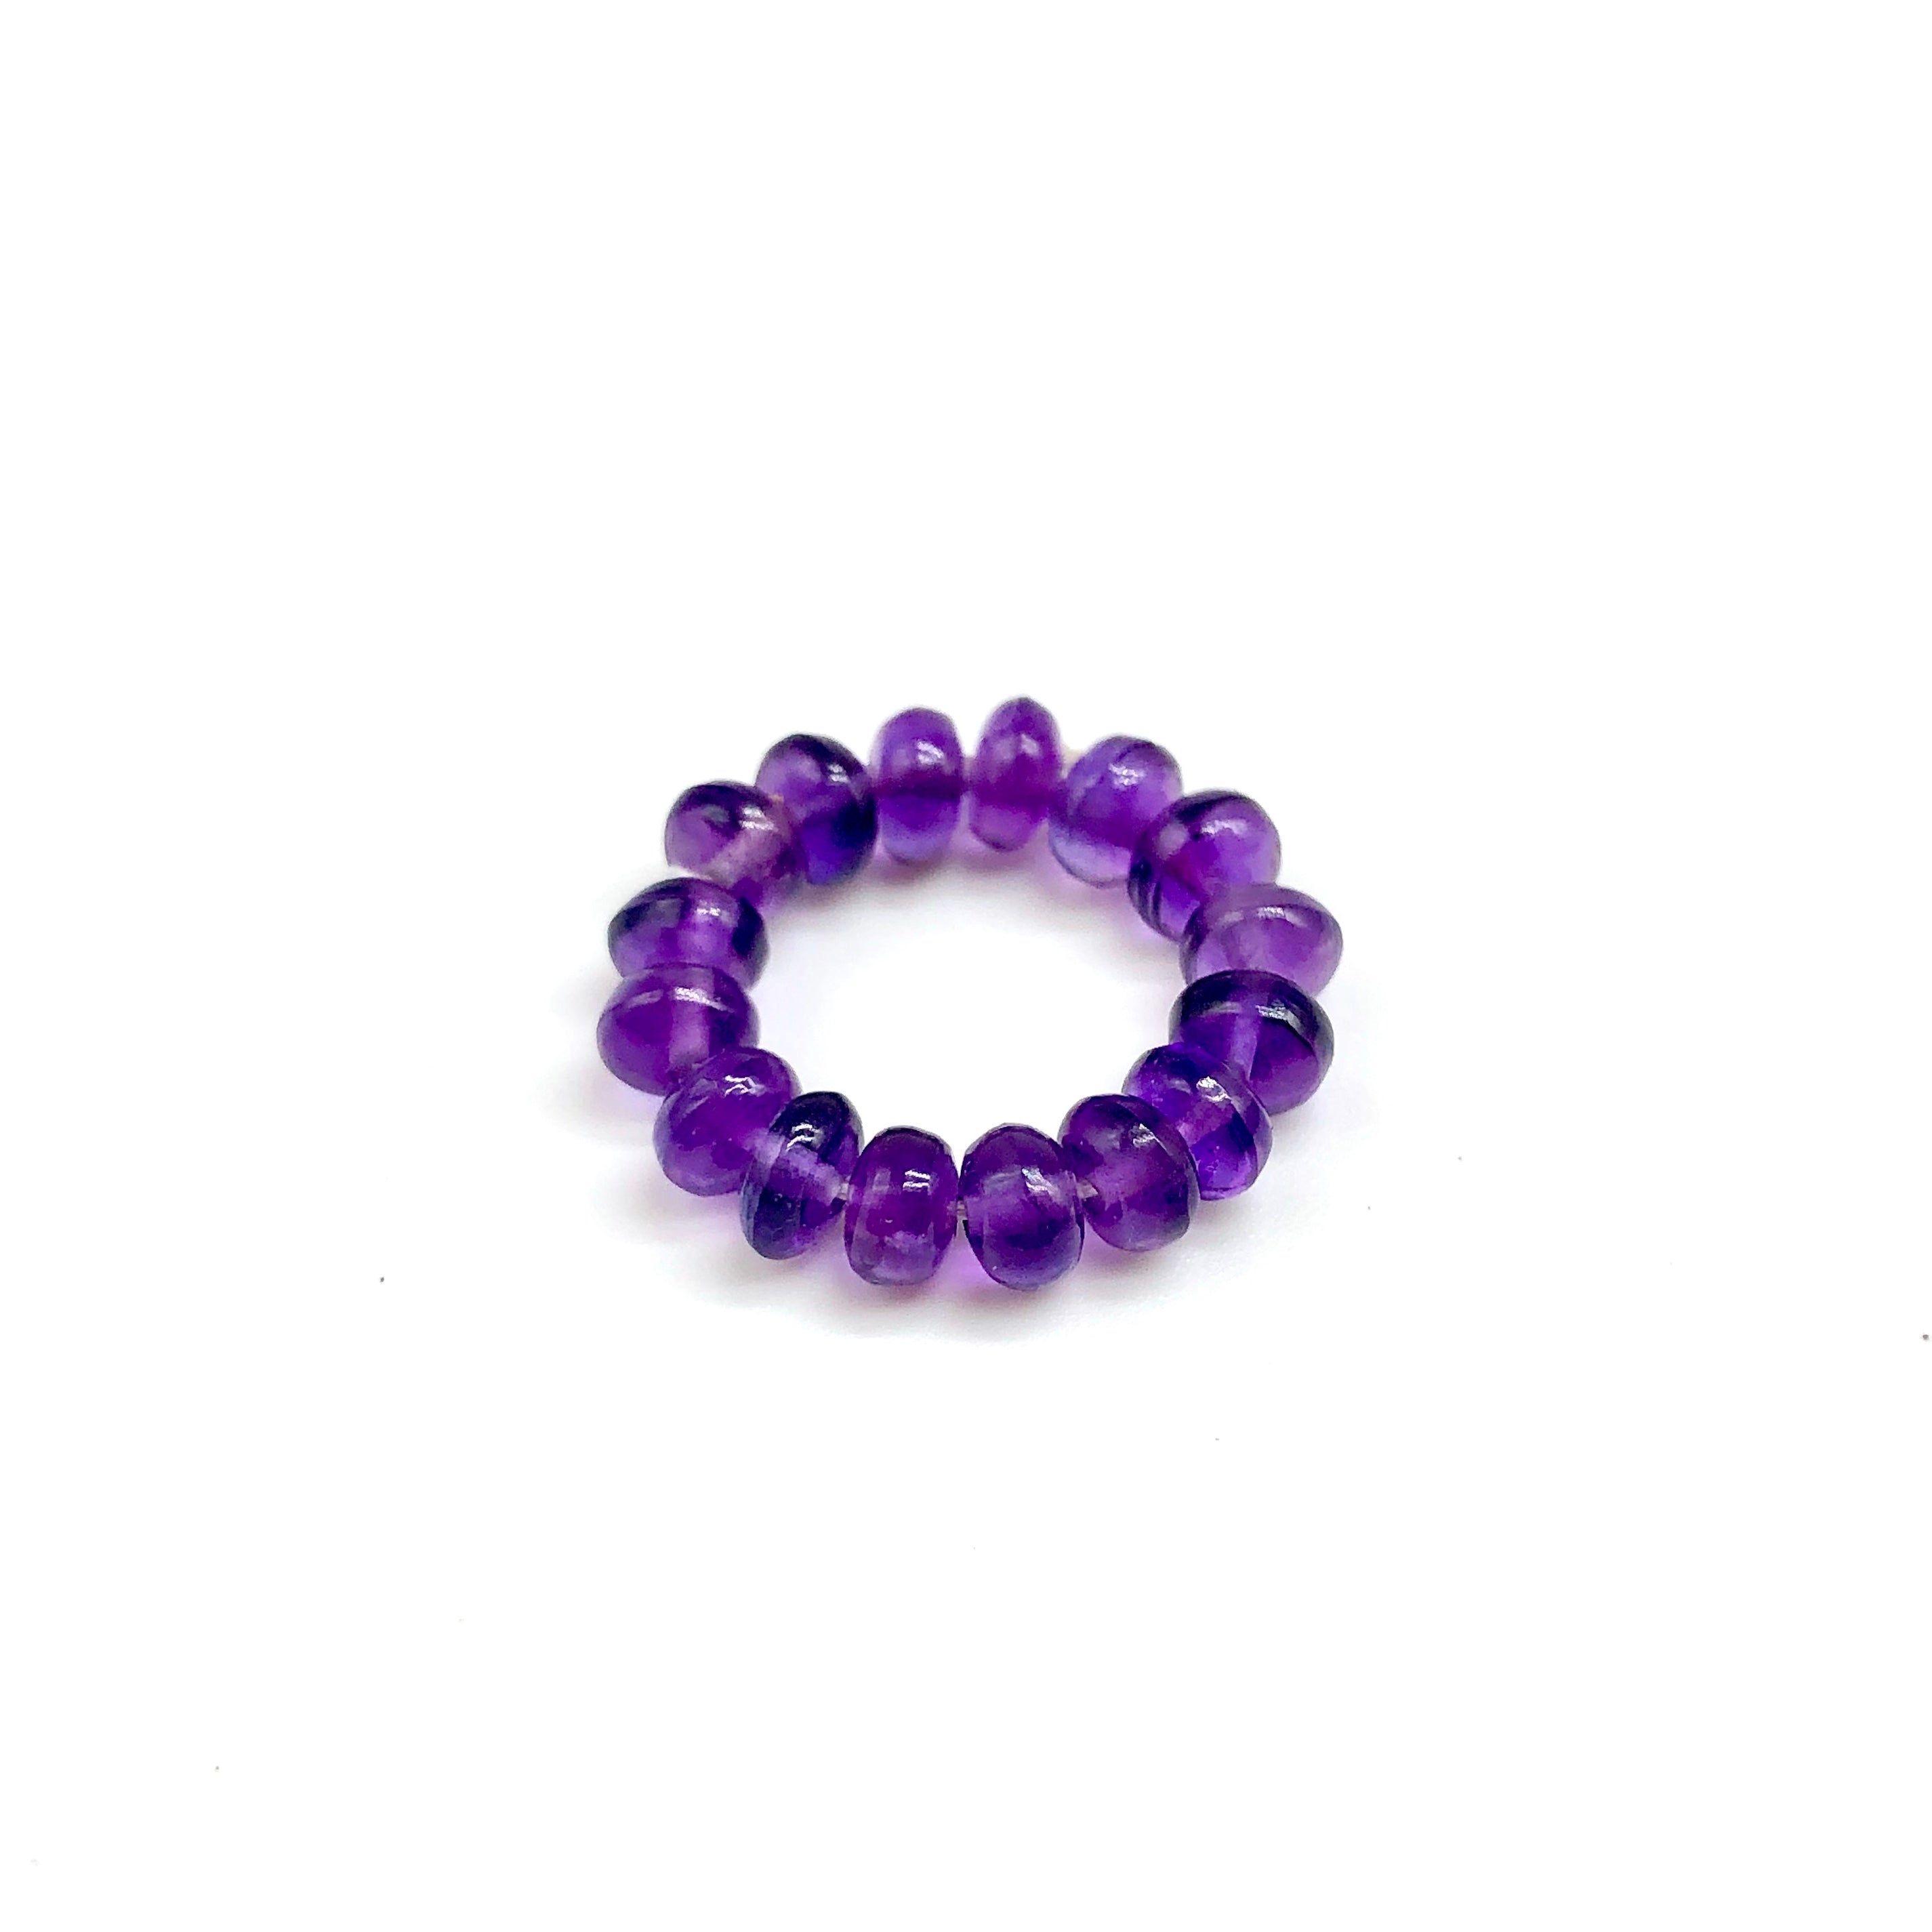 Amethyst Purple Gem Energy Ring known for attaining wisdom